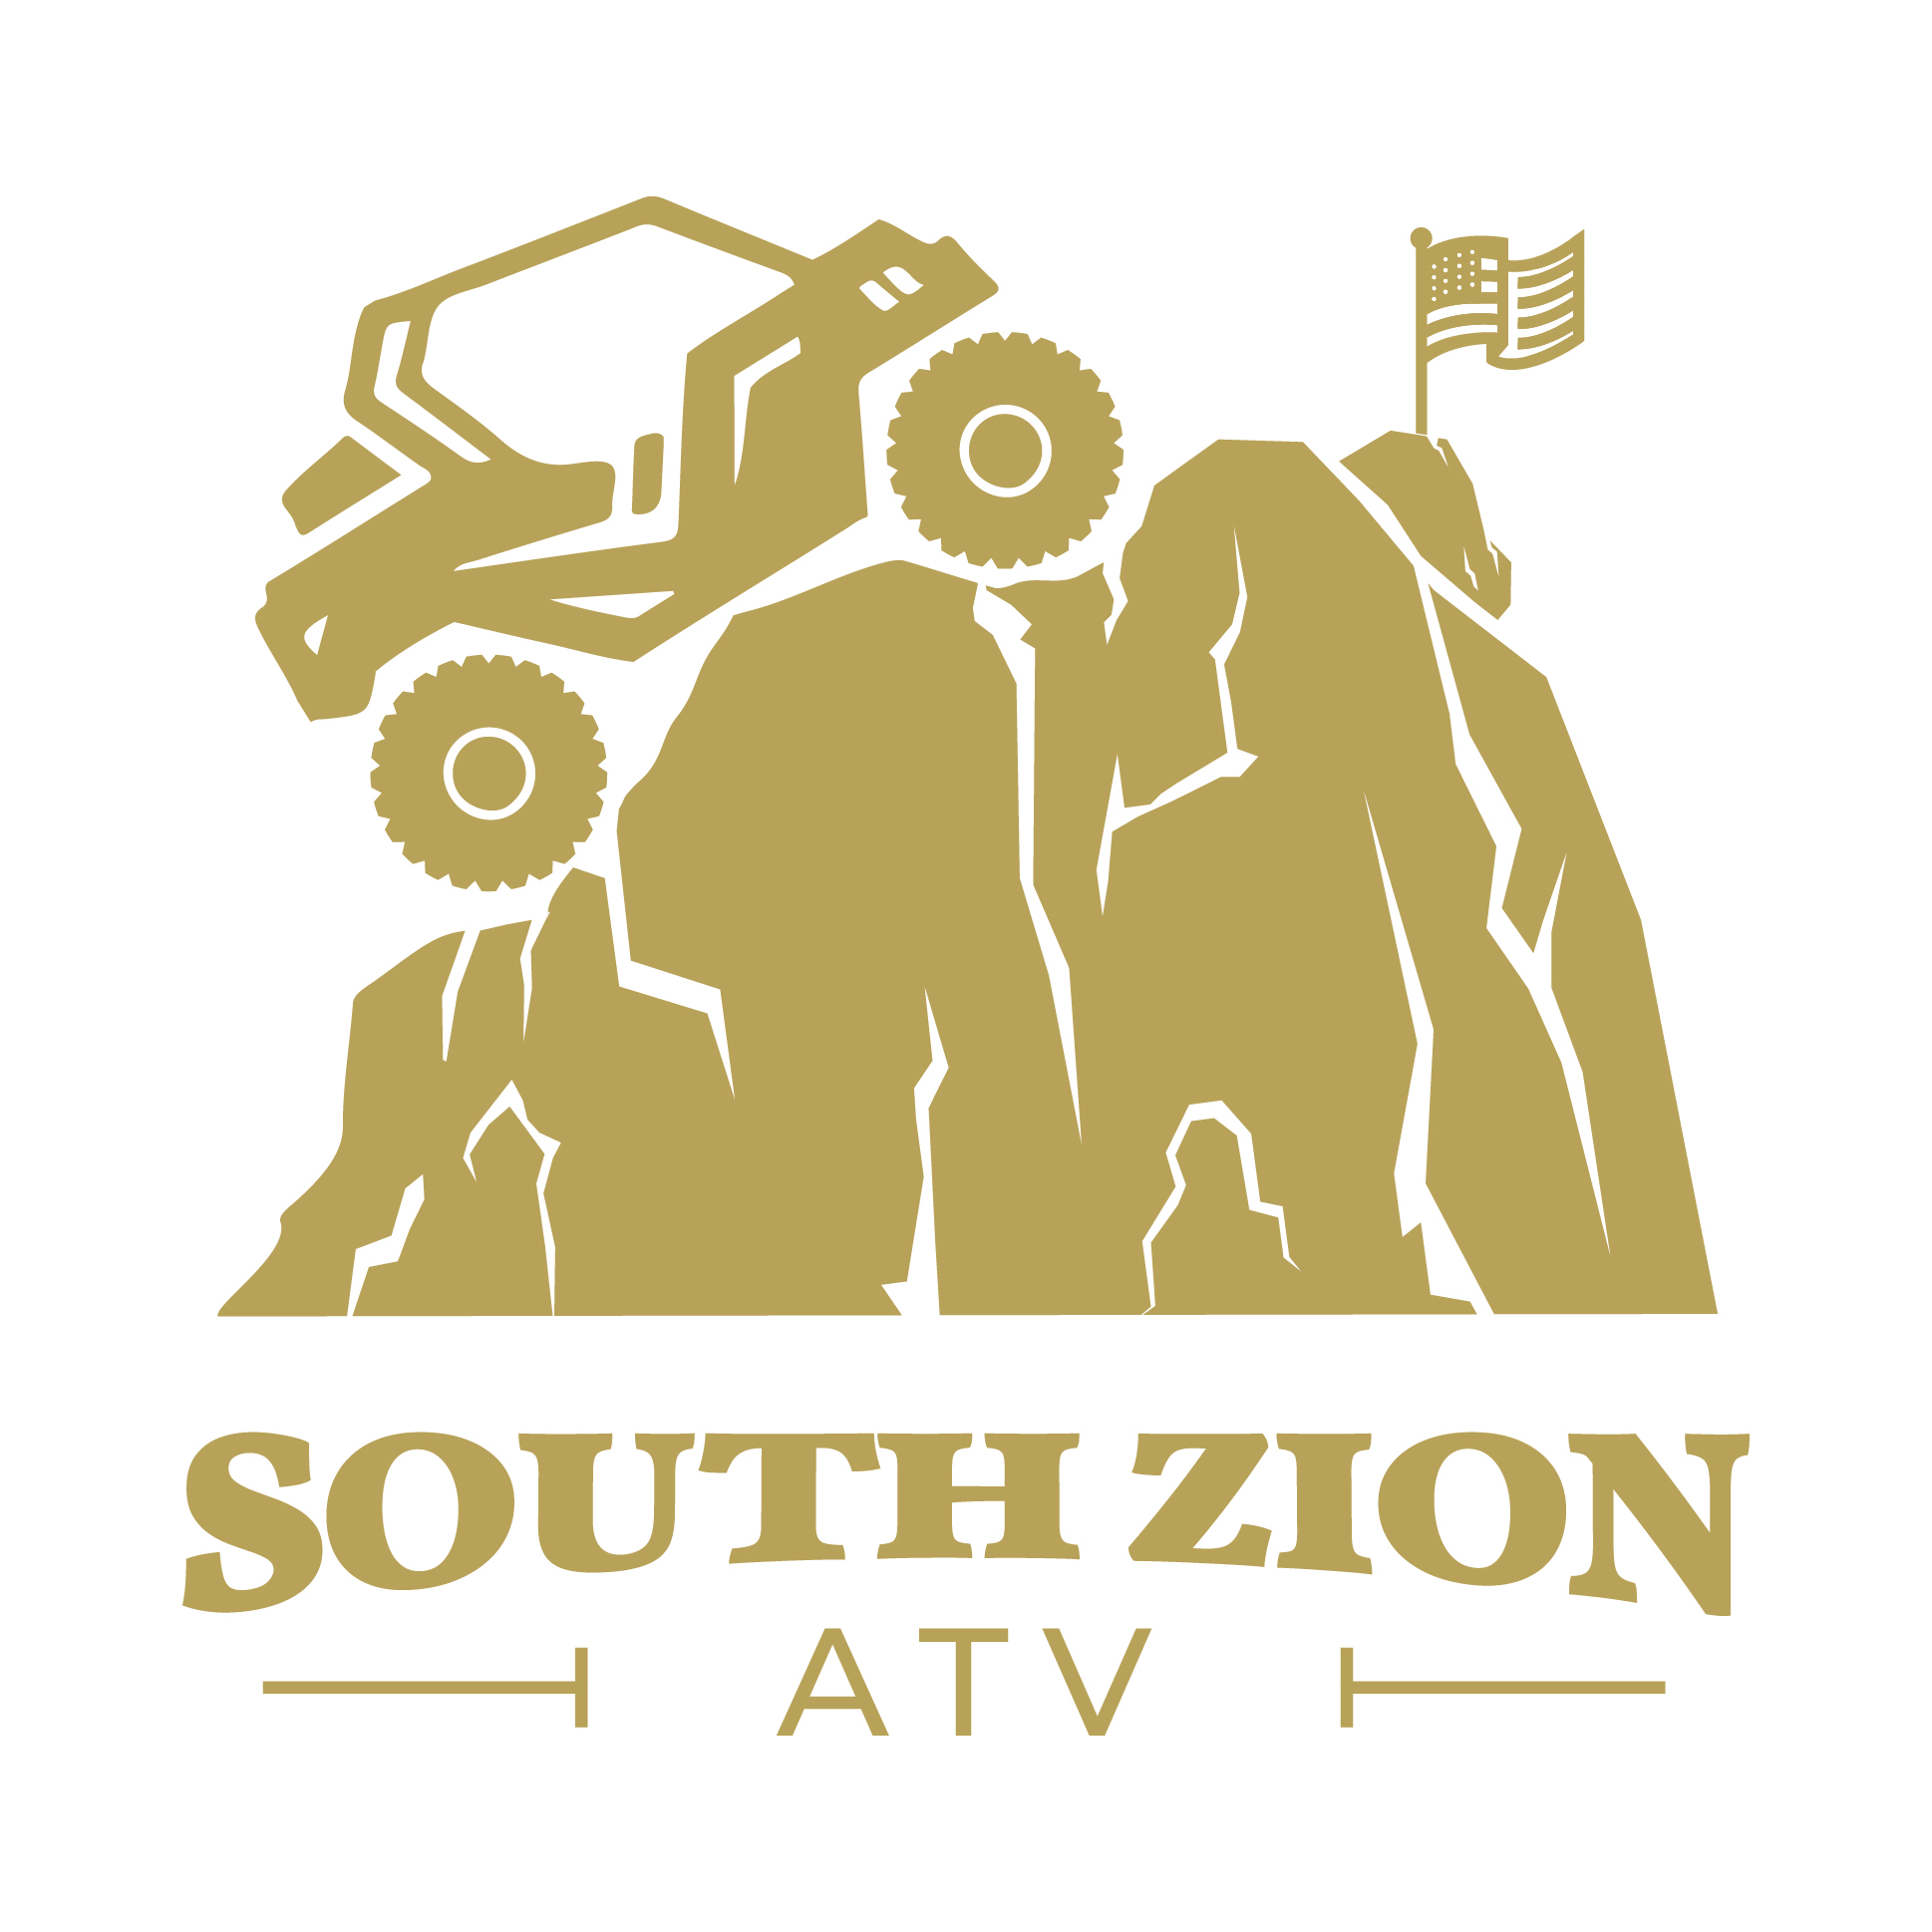 South Zion ATV Tours  logo